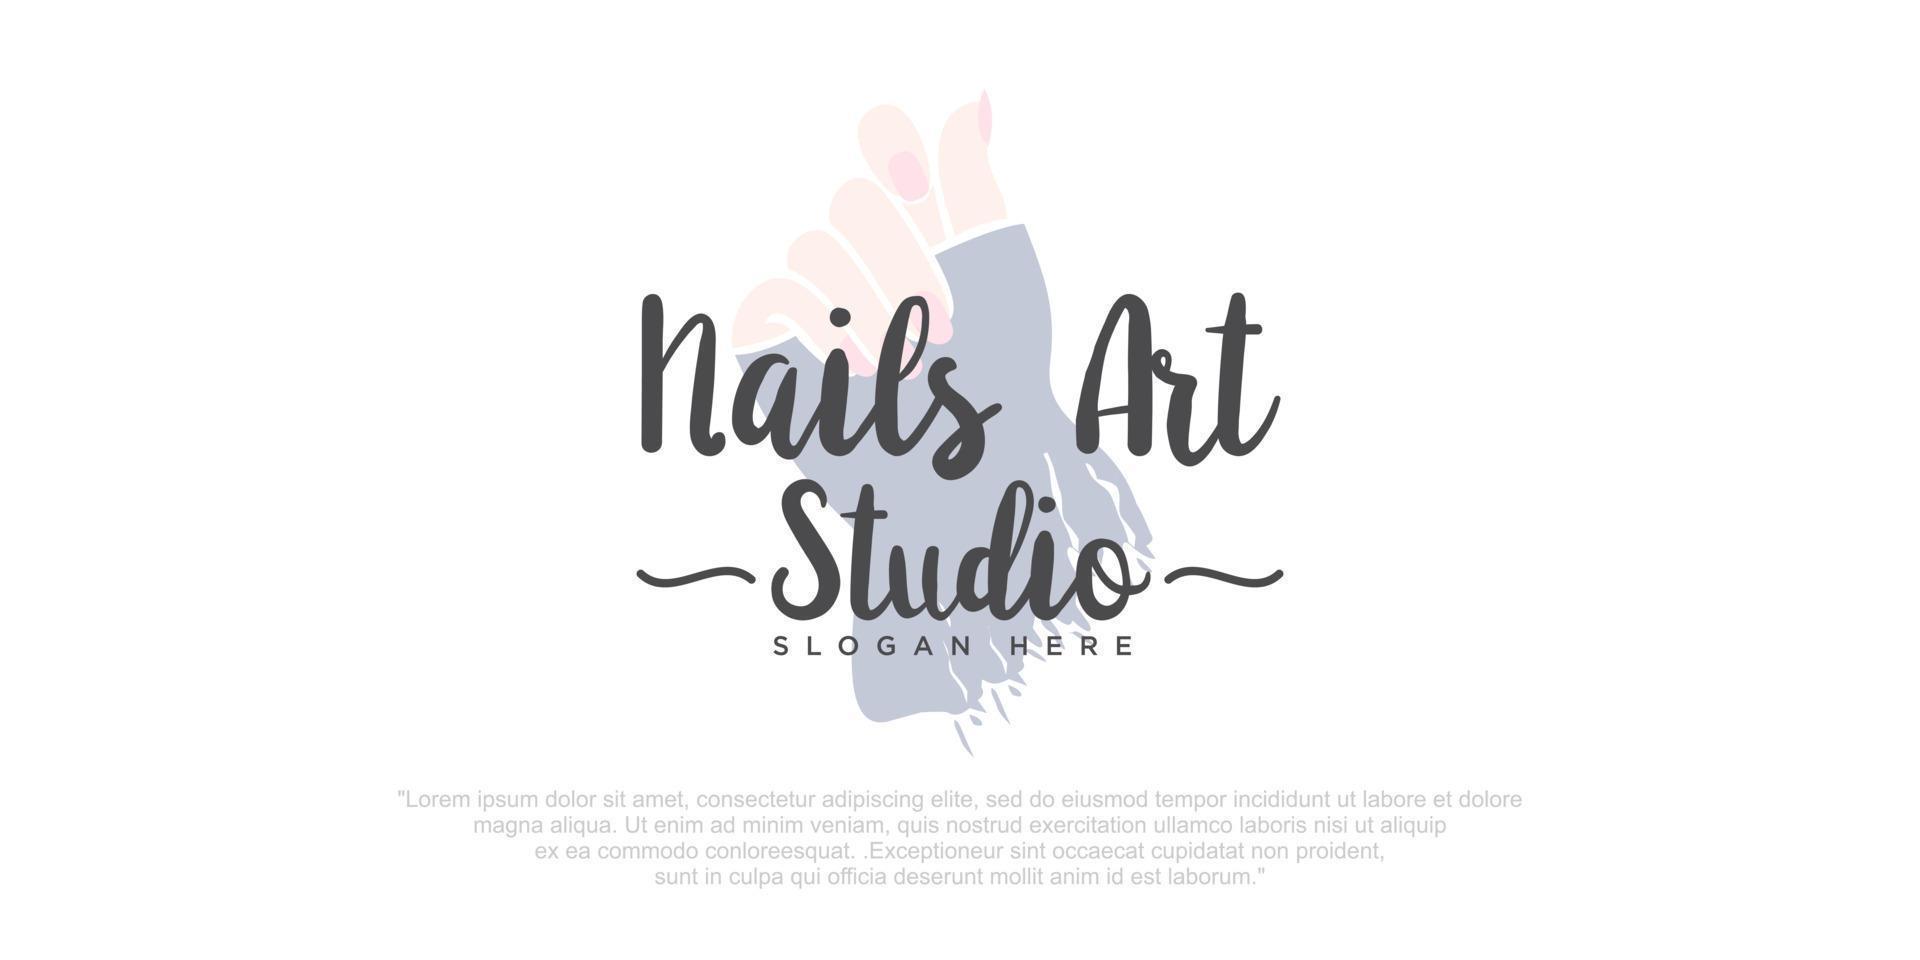 Nails art studio or nails polish icon set logo design template vector